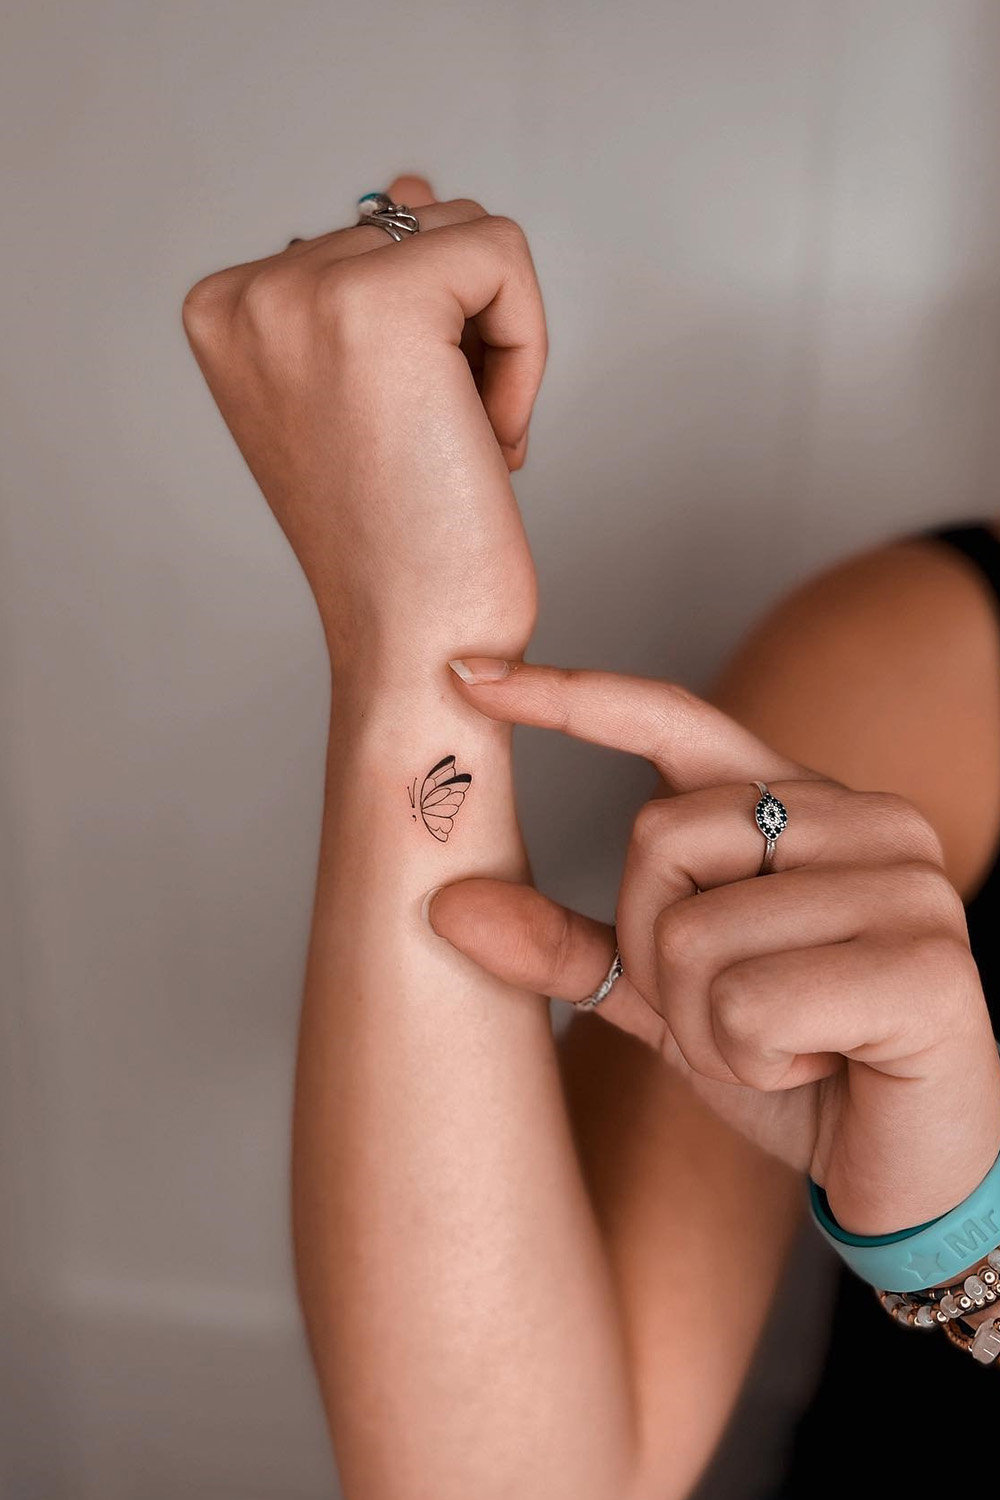 Tiny butterfly tattoo ideas on the wrist